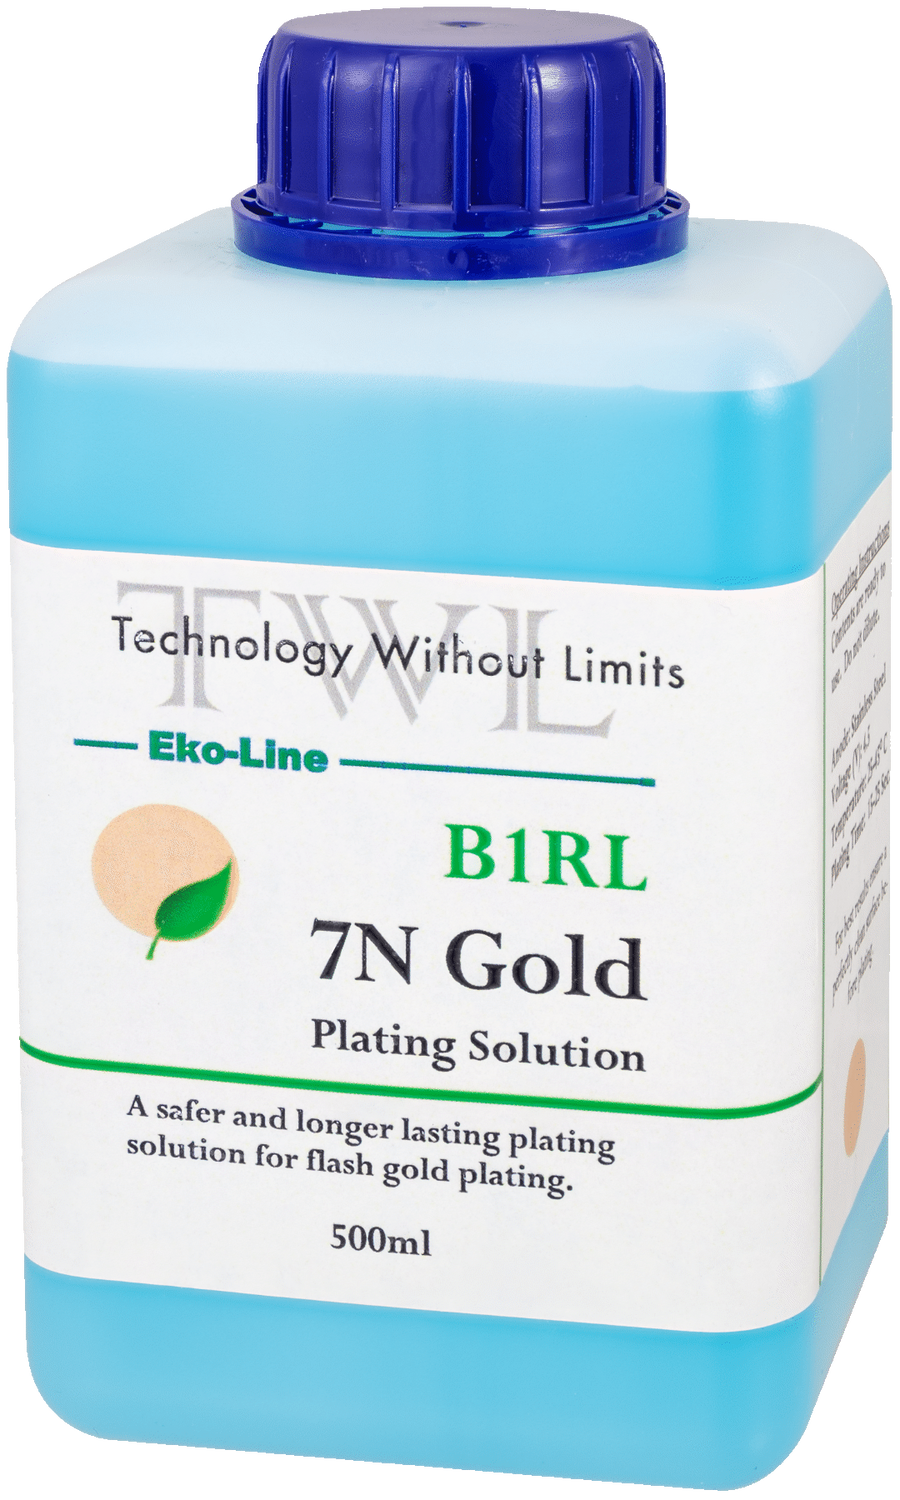 B1RL Gold Plating solutions